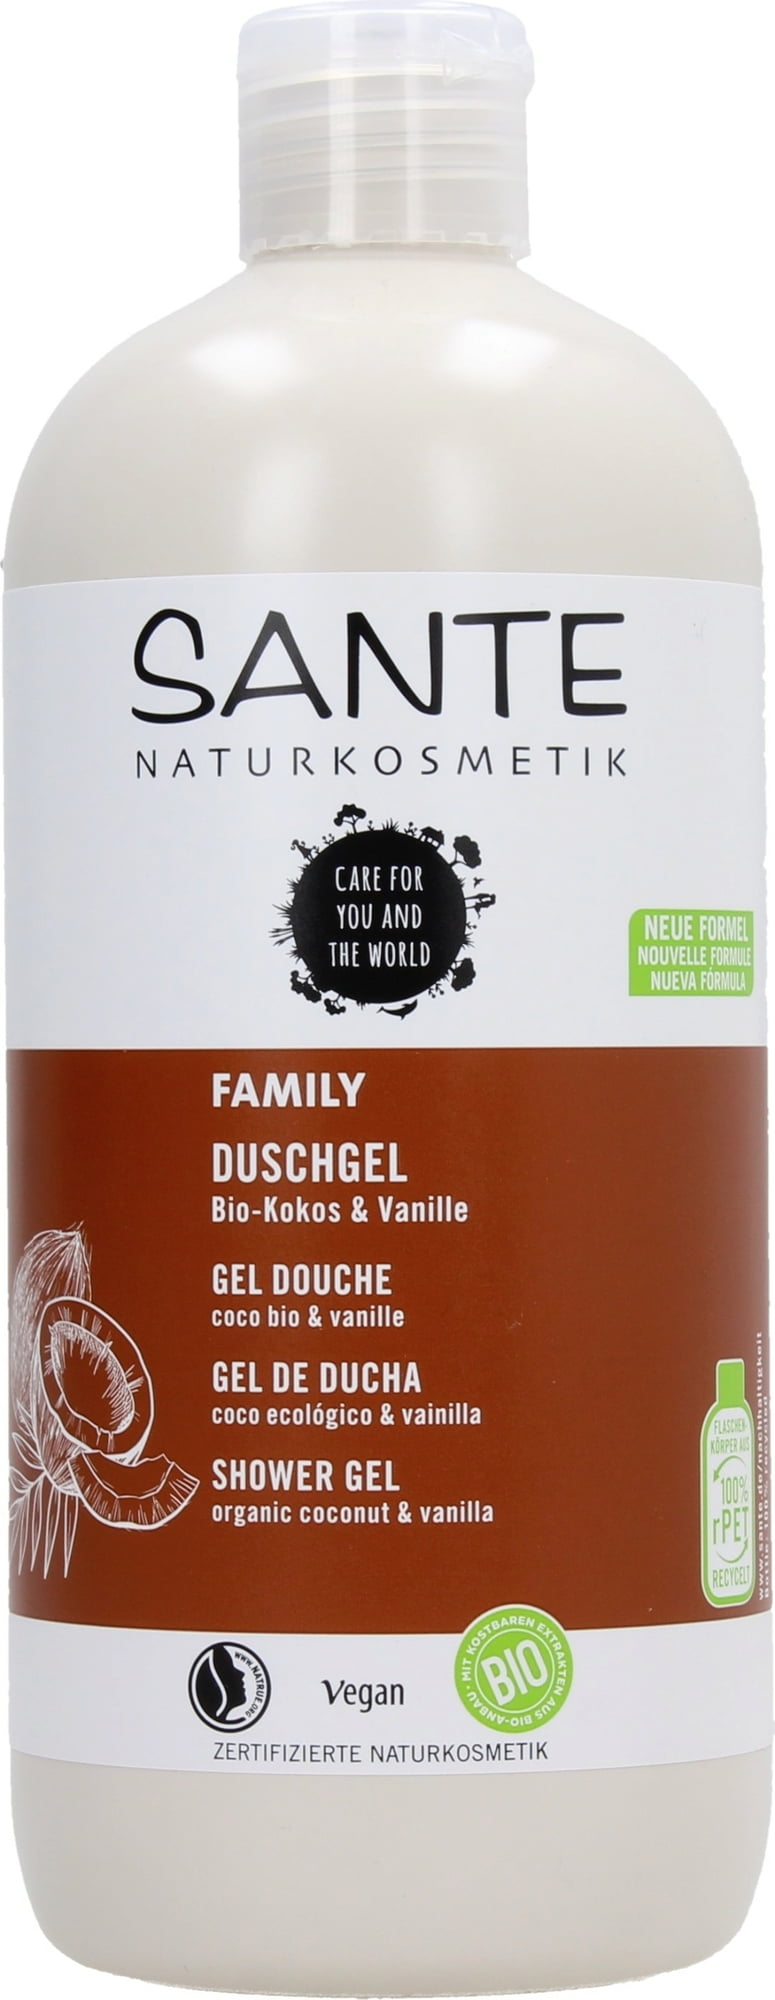 Sante FAMILY Duschgel Bio-Kokos & Vanille 500 ml